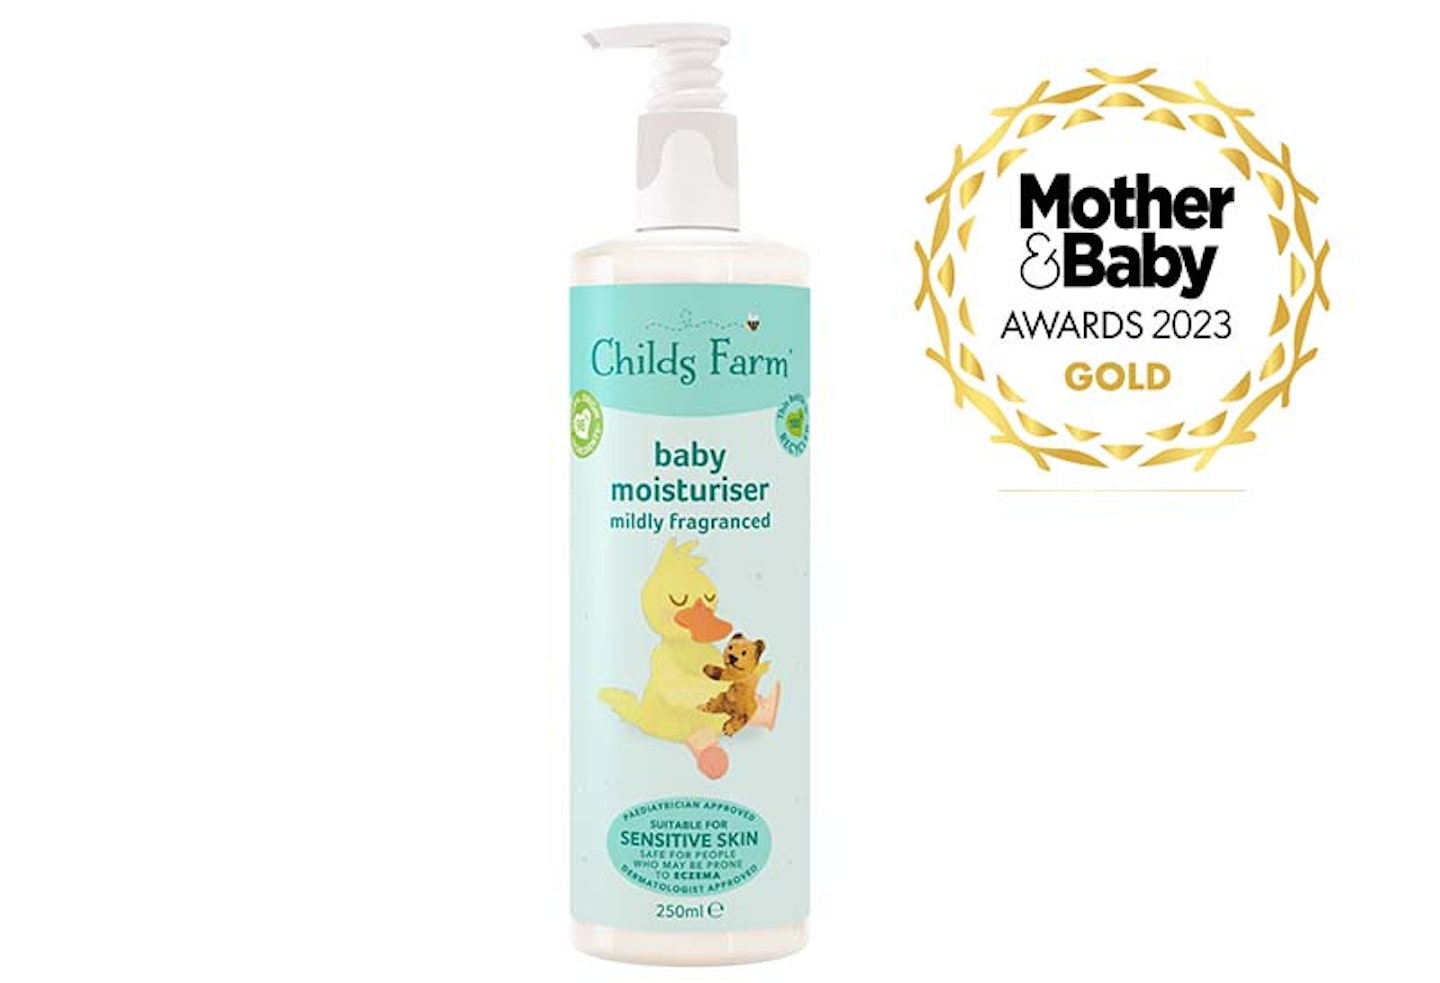 Childs Farm Baby Moisturiser Mildly Fragranced M&B awards 2023